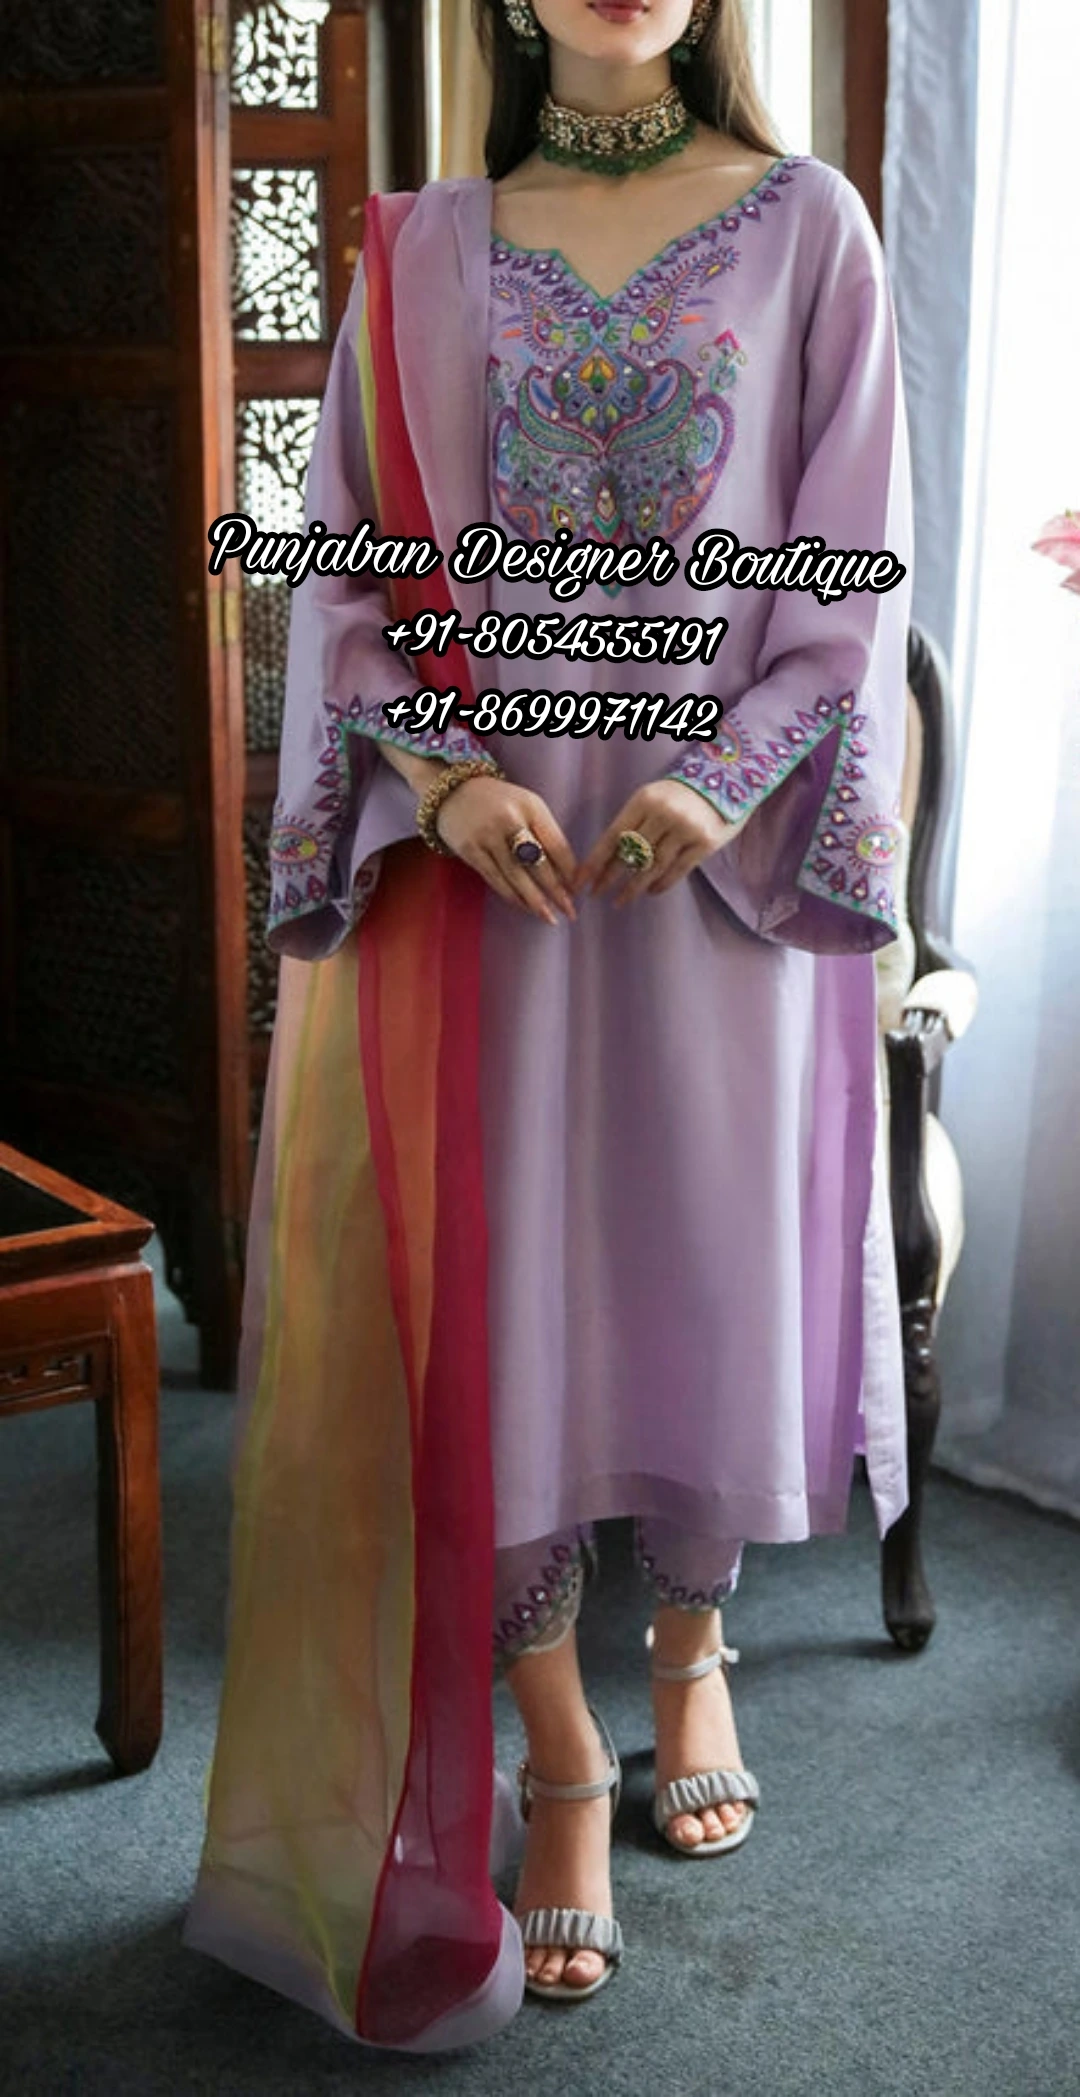 Design Punjabi Suit Neck | Punjaban Designer Boutique